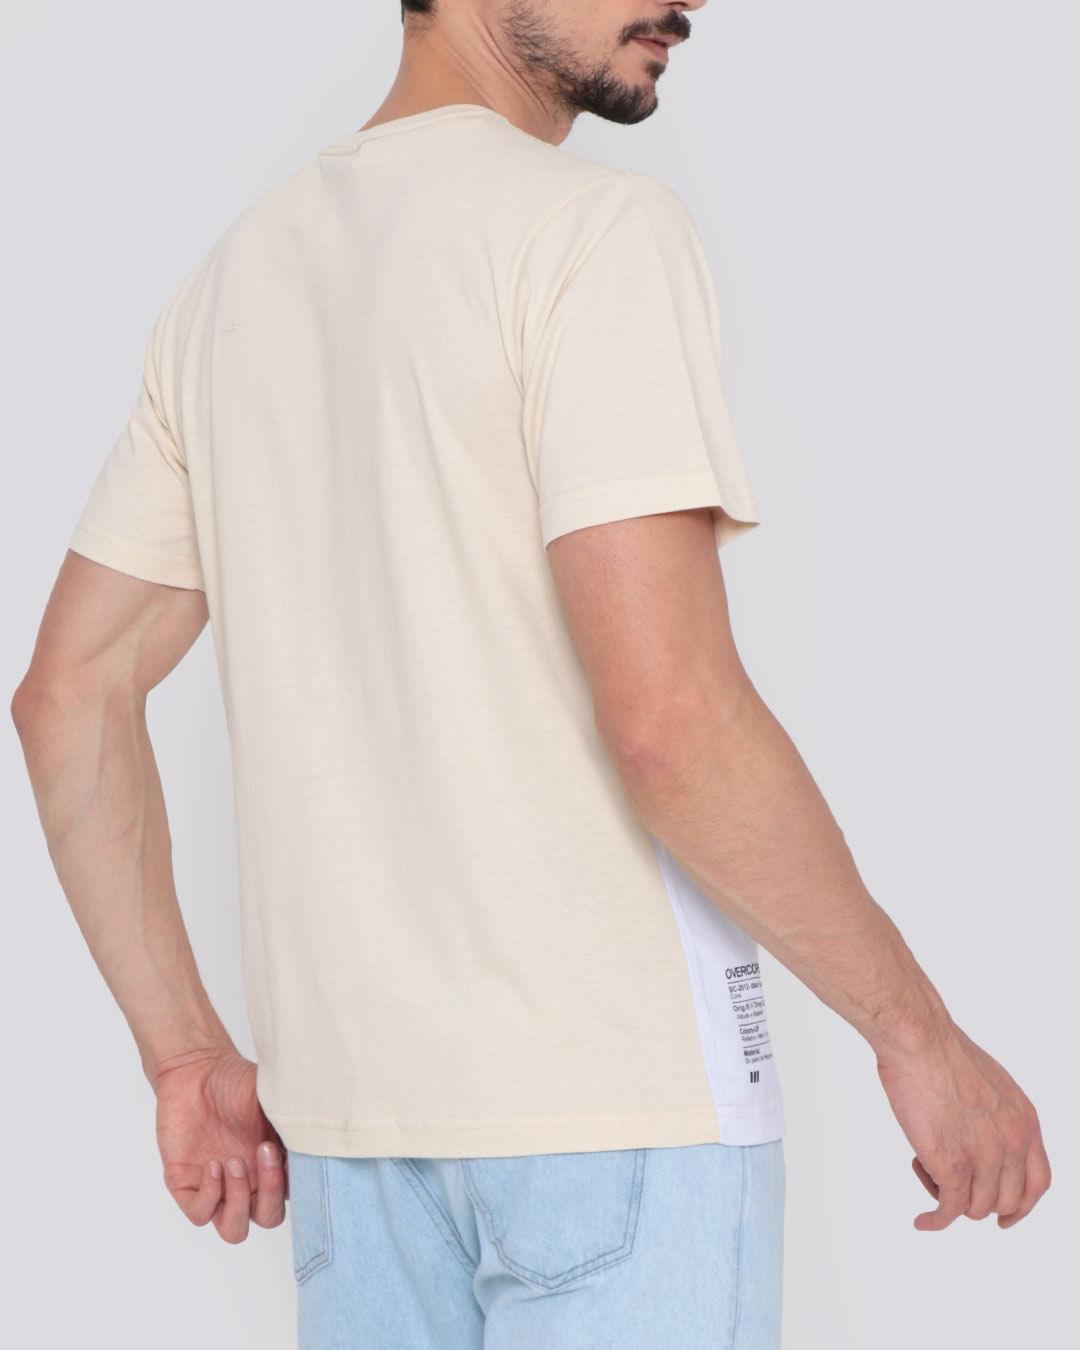 Camiseta-Masculina-Overcore-Recorte-Bege-Claro